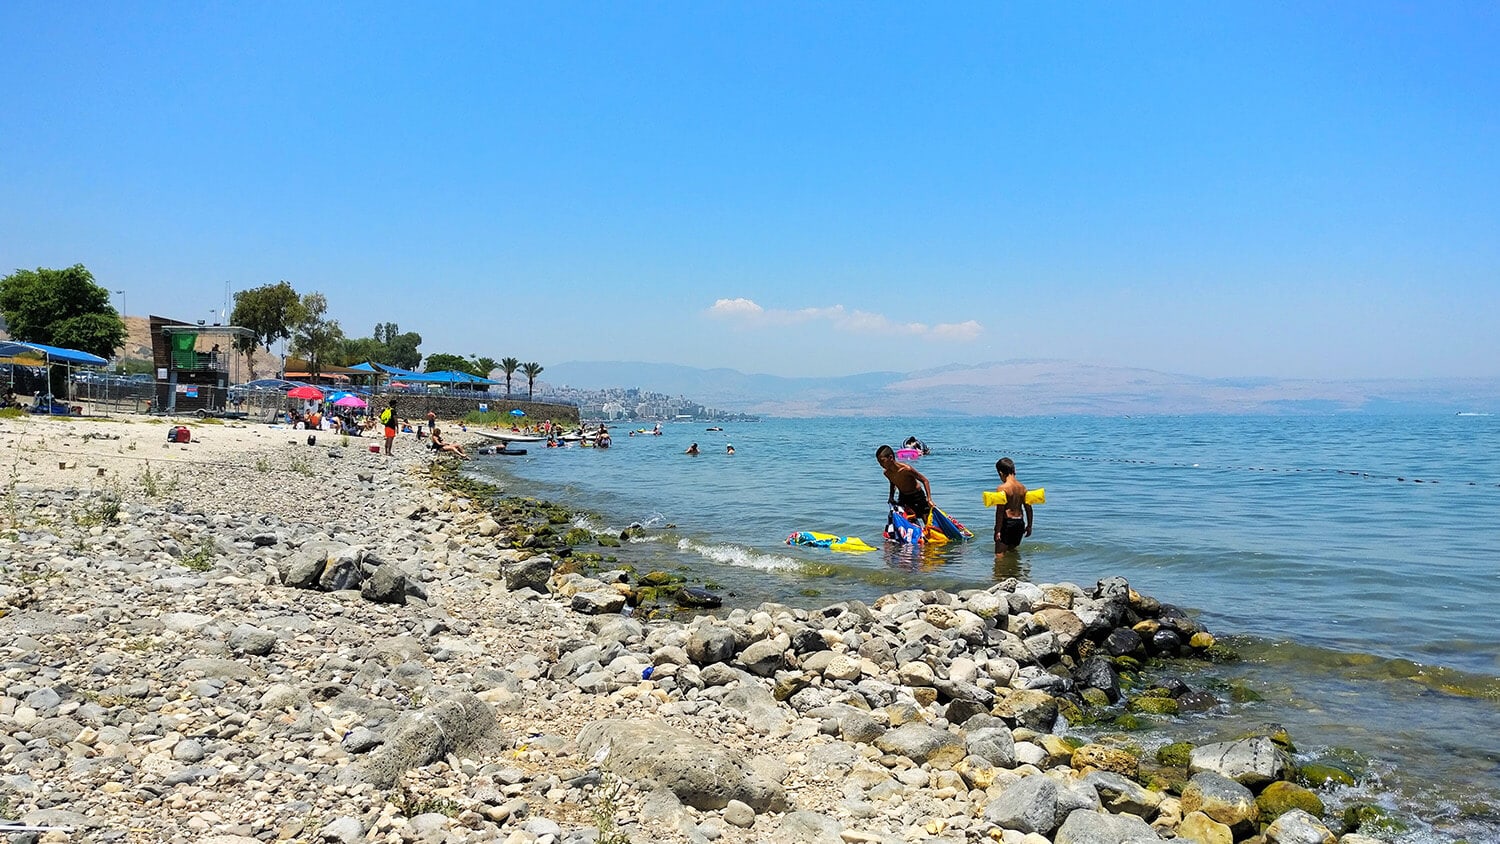 Sea of Galilee beach place